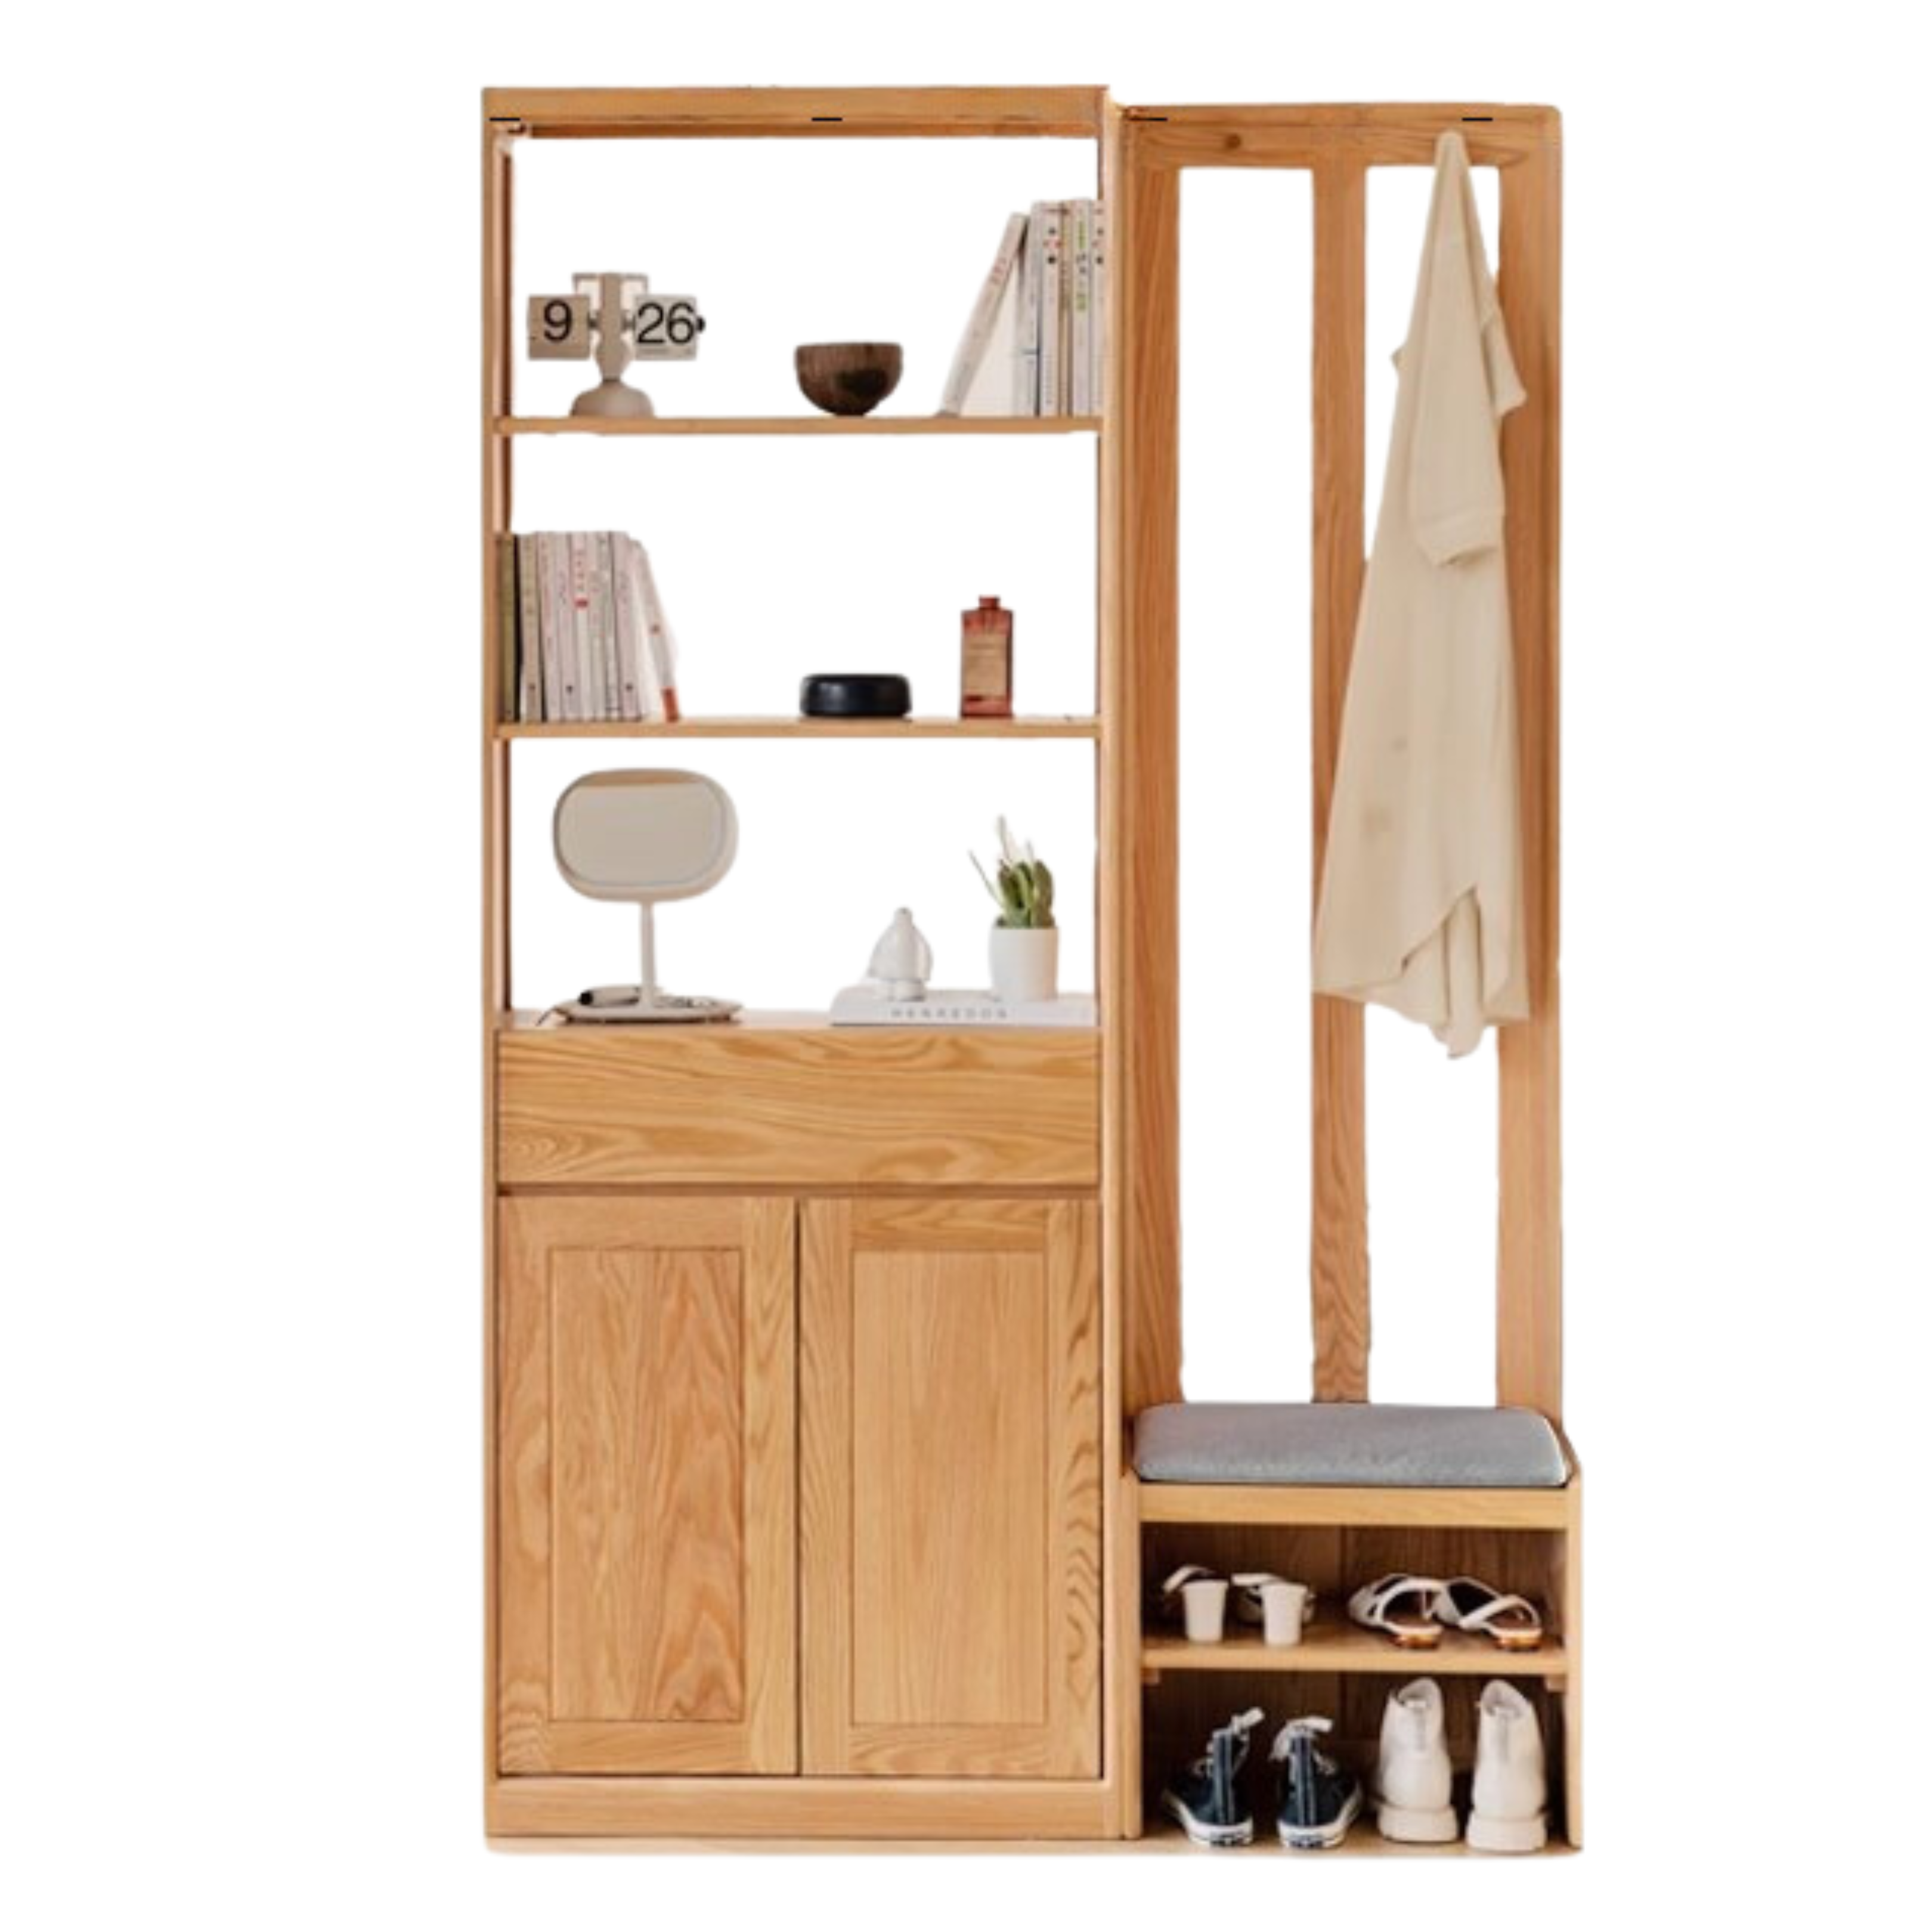 Oak solid wood Clothes hangers racks, Shoe Cabinets